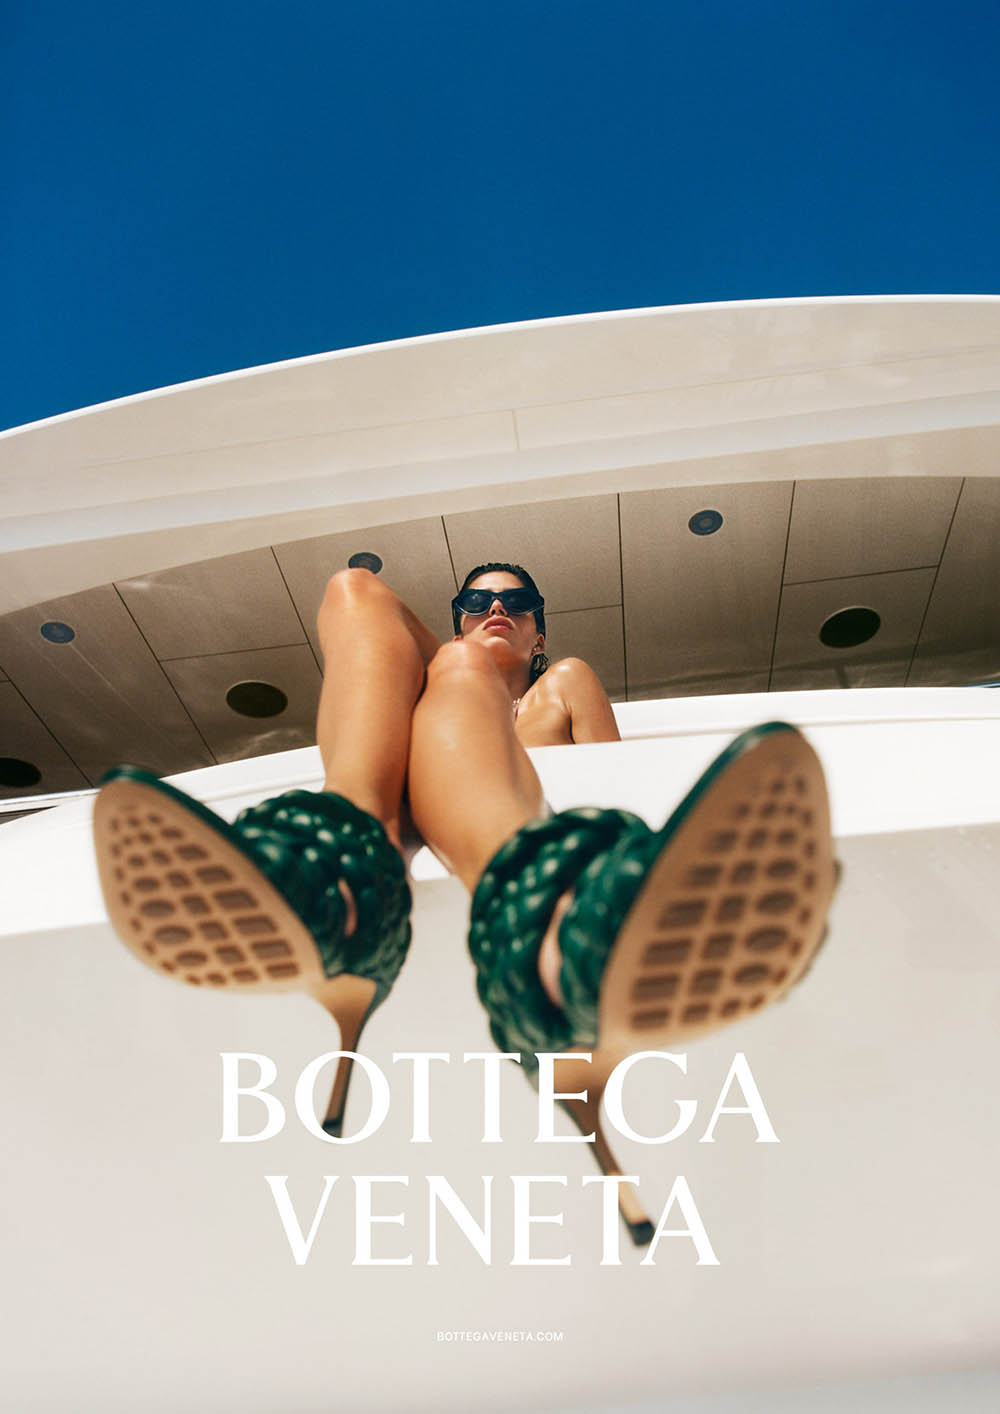 Bottega Veneta Spring Summer 2020 Campaign